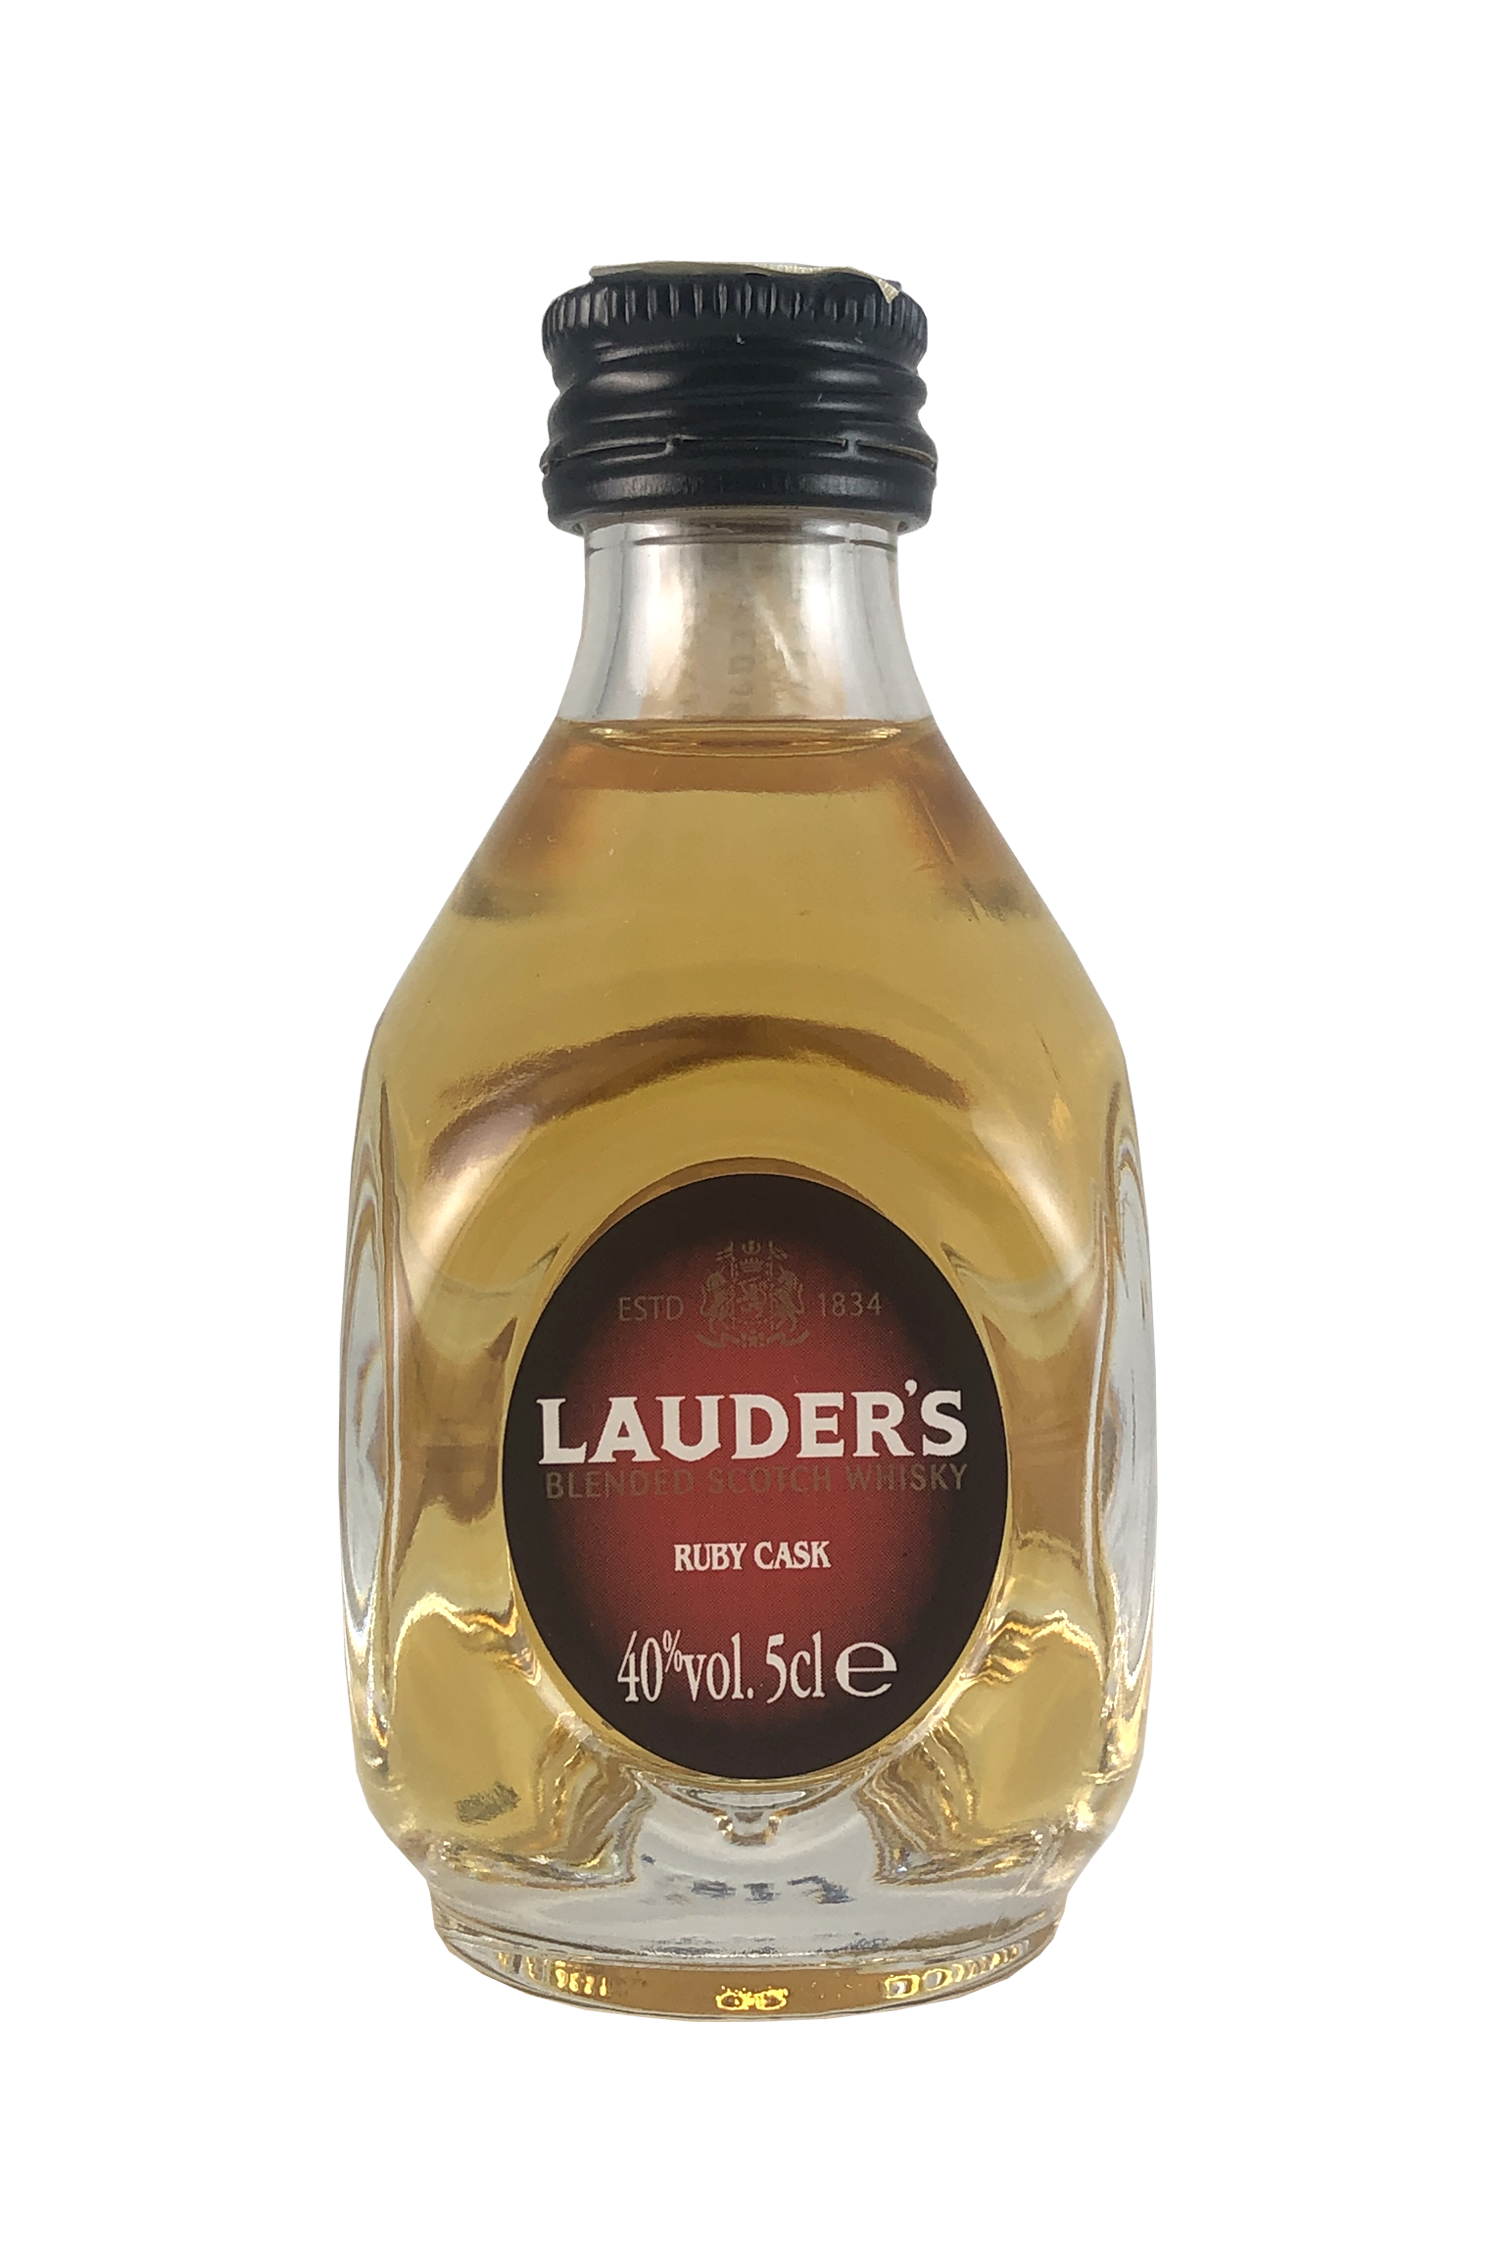 Lauder’s Ruby Cask Whisky